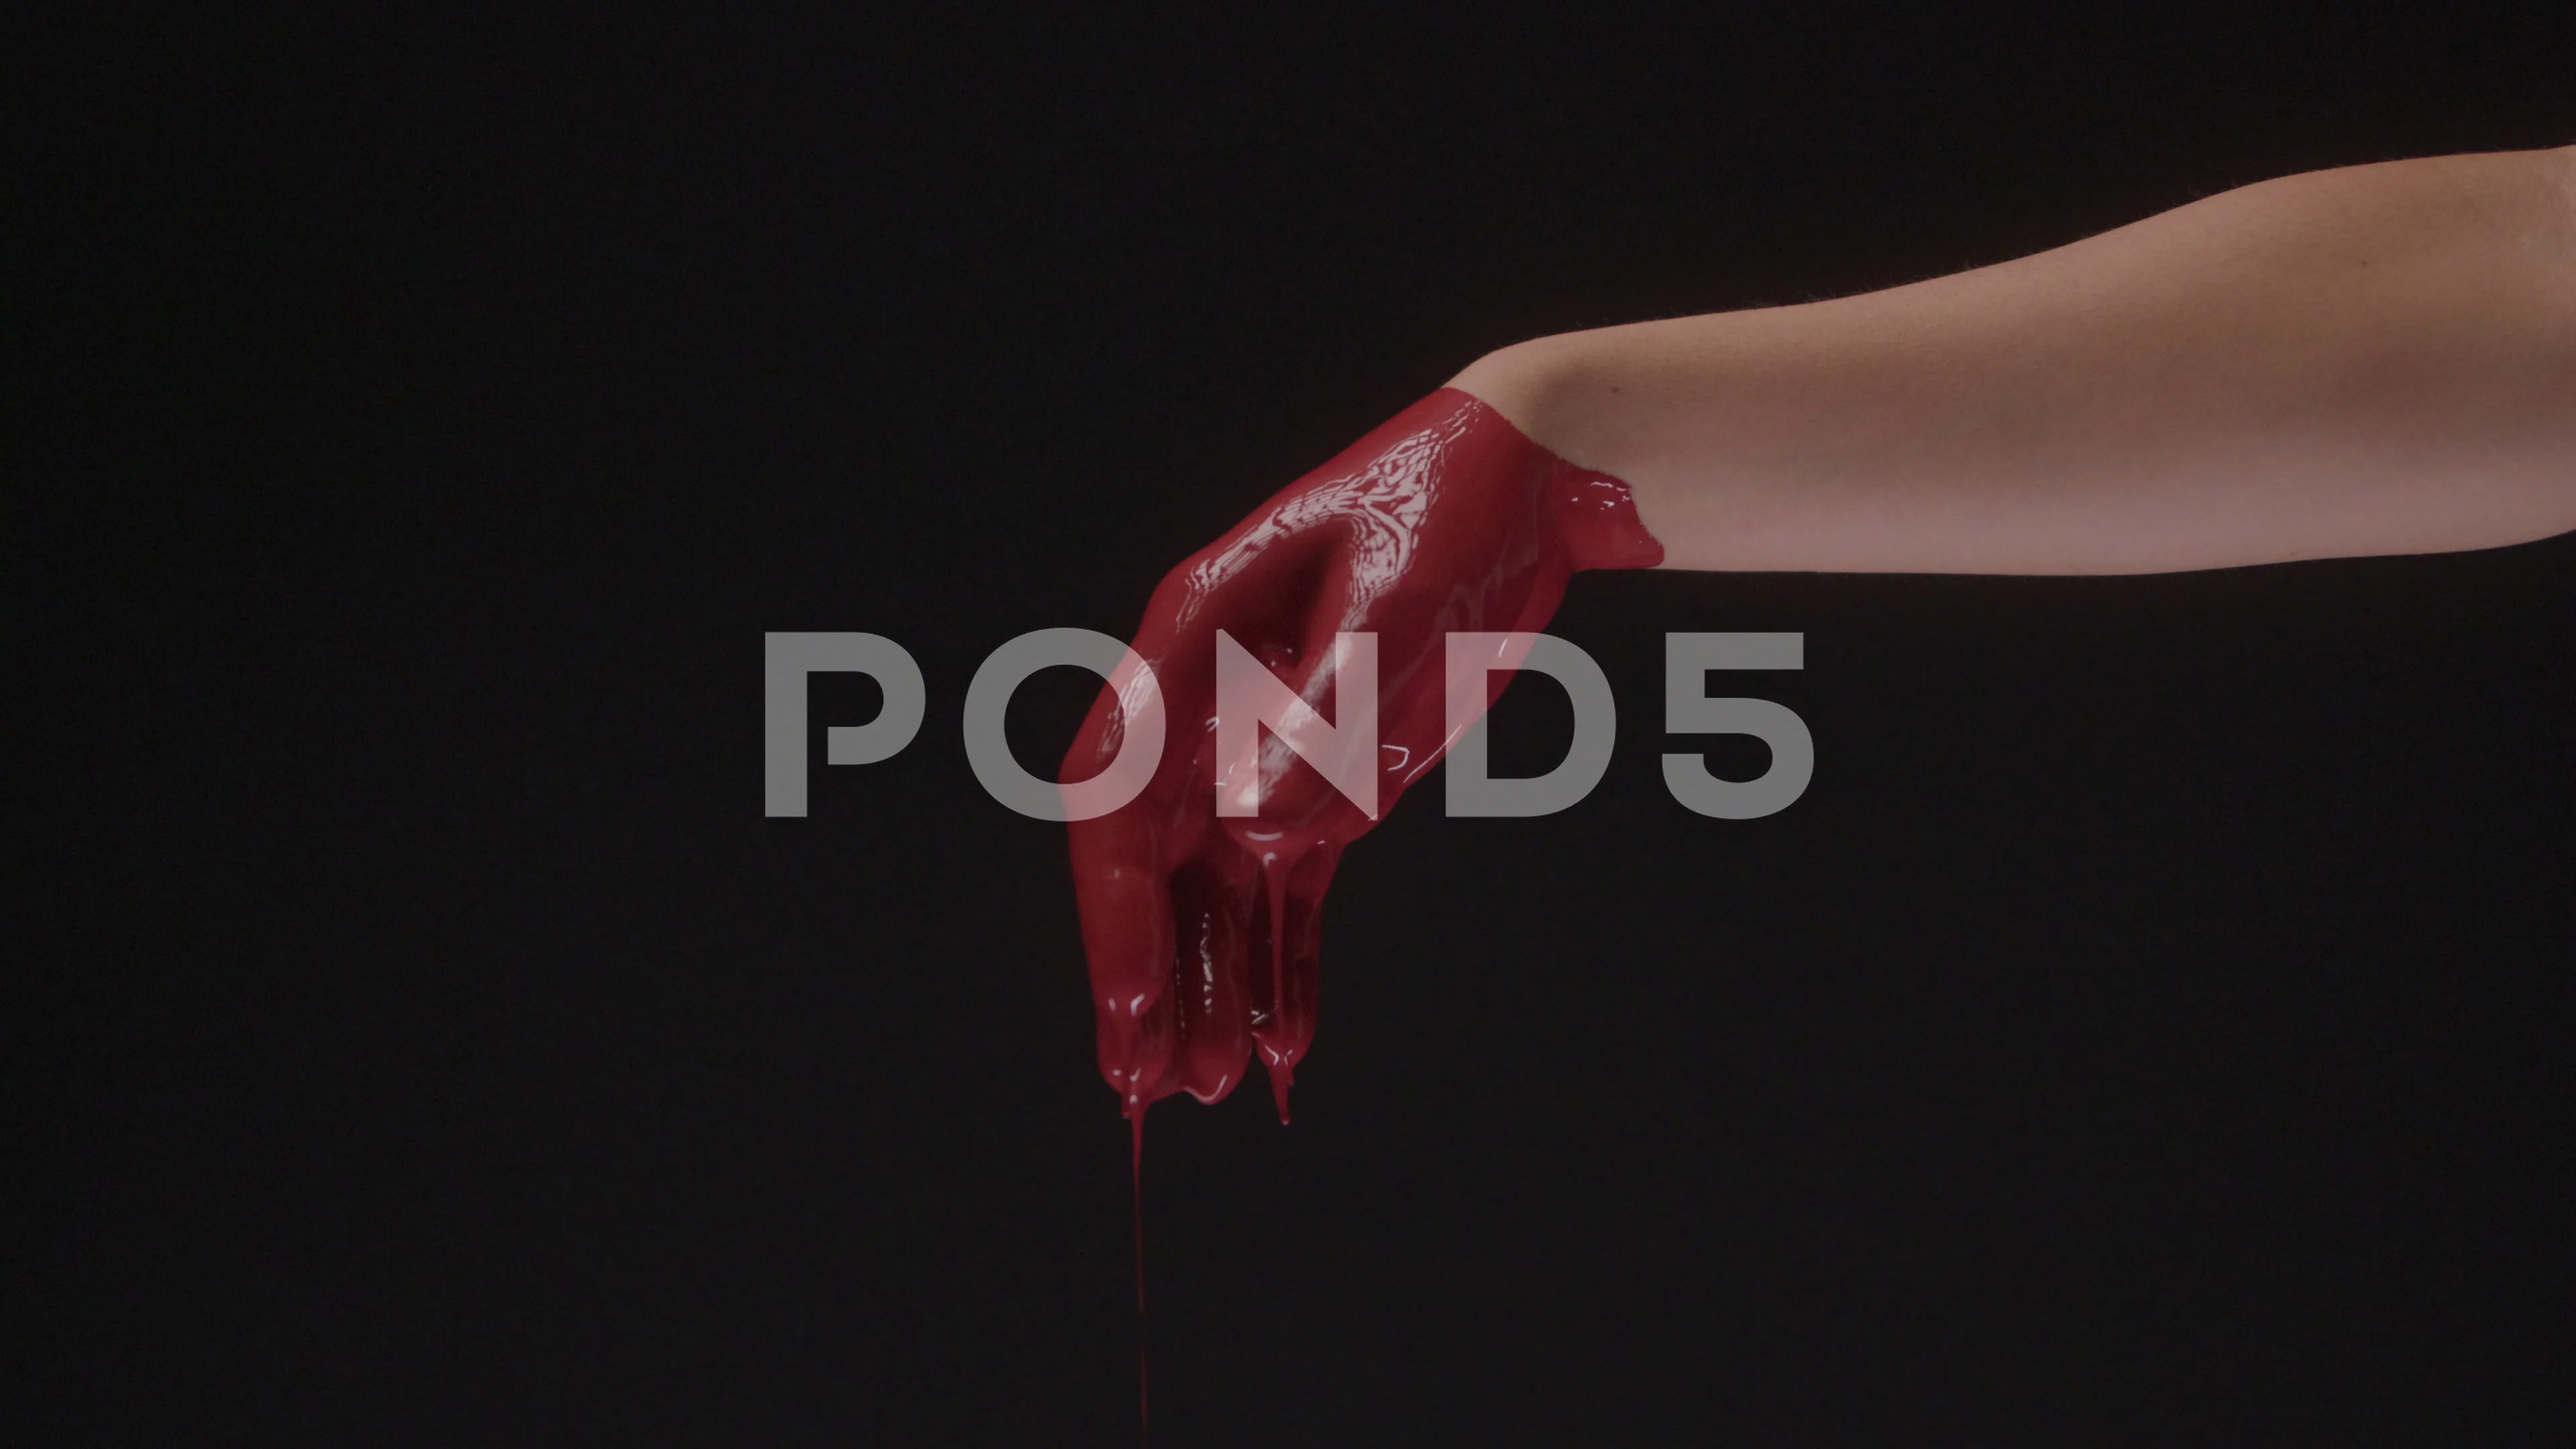 dripping blood hand